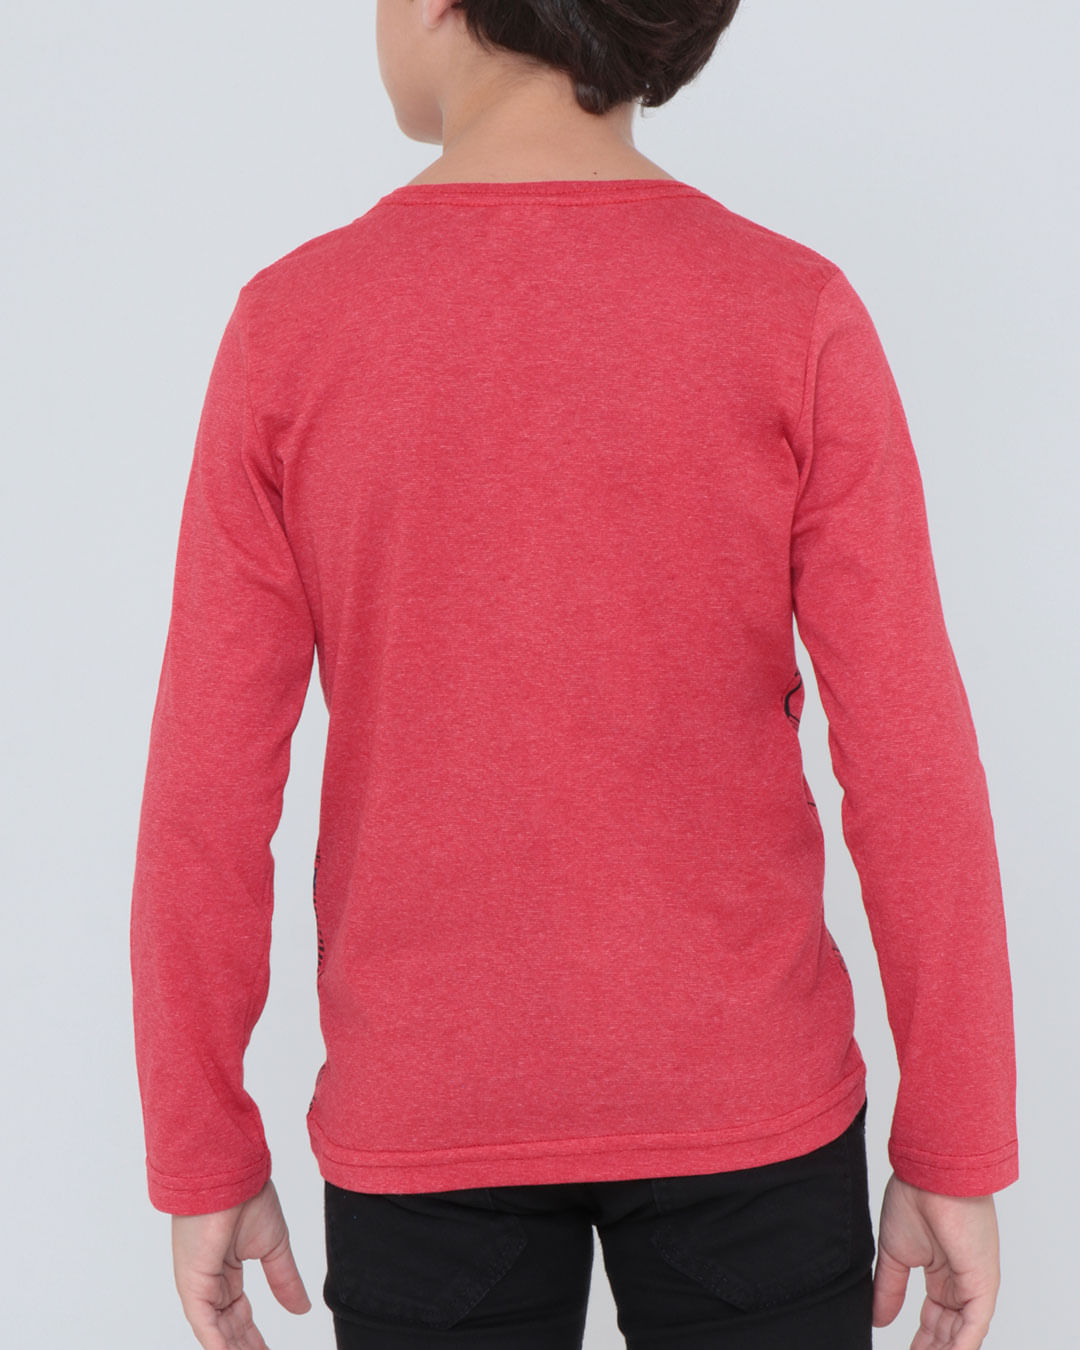 Camiseta-In2116-Ml-M412-Haranha---Vermelho-Medio